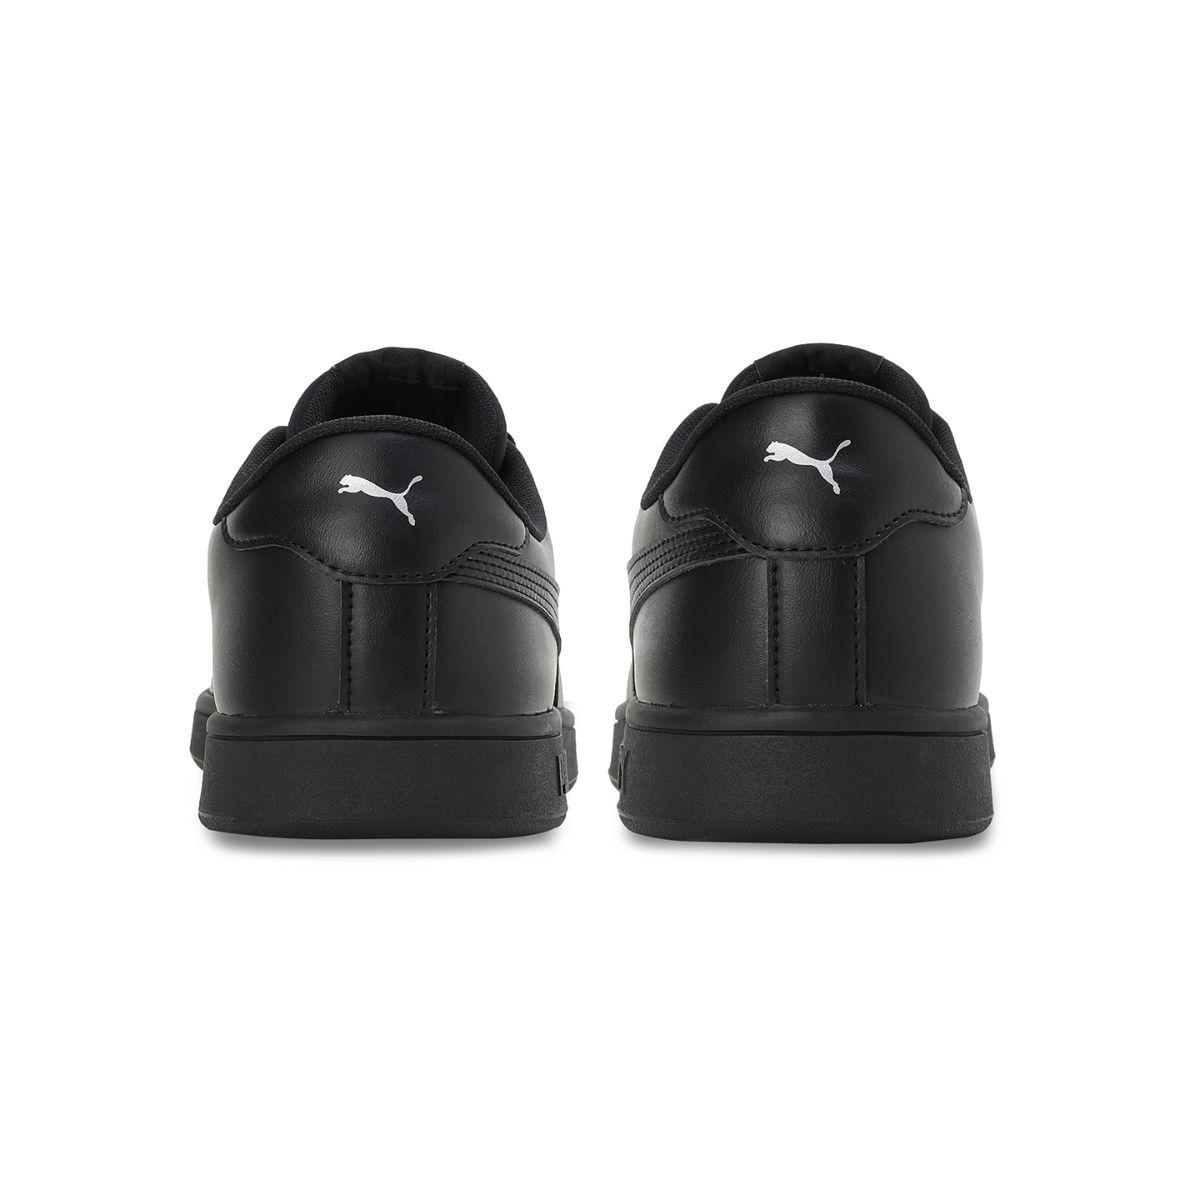 Mario Low Refined | Black Full Grain Leather | Luxury Sneaker